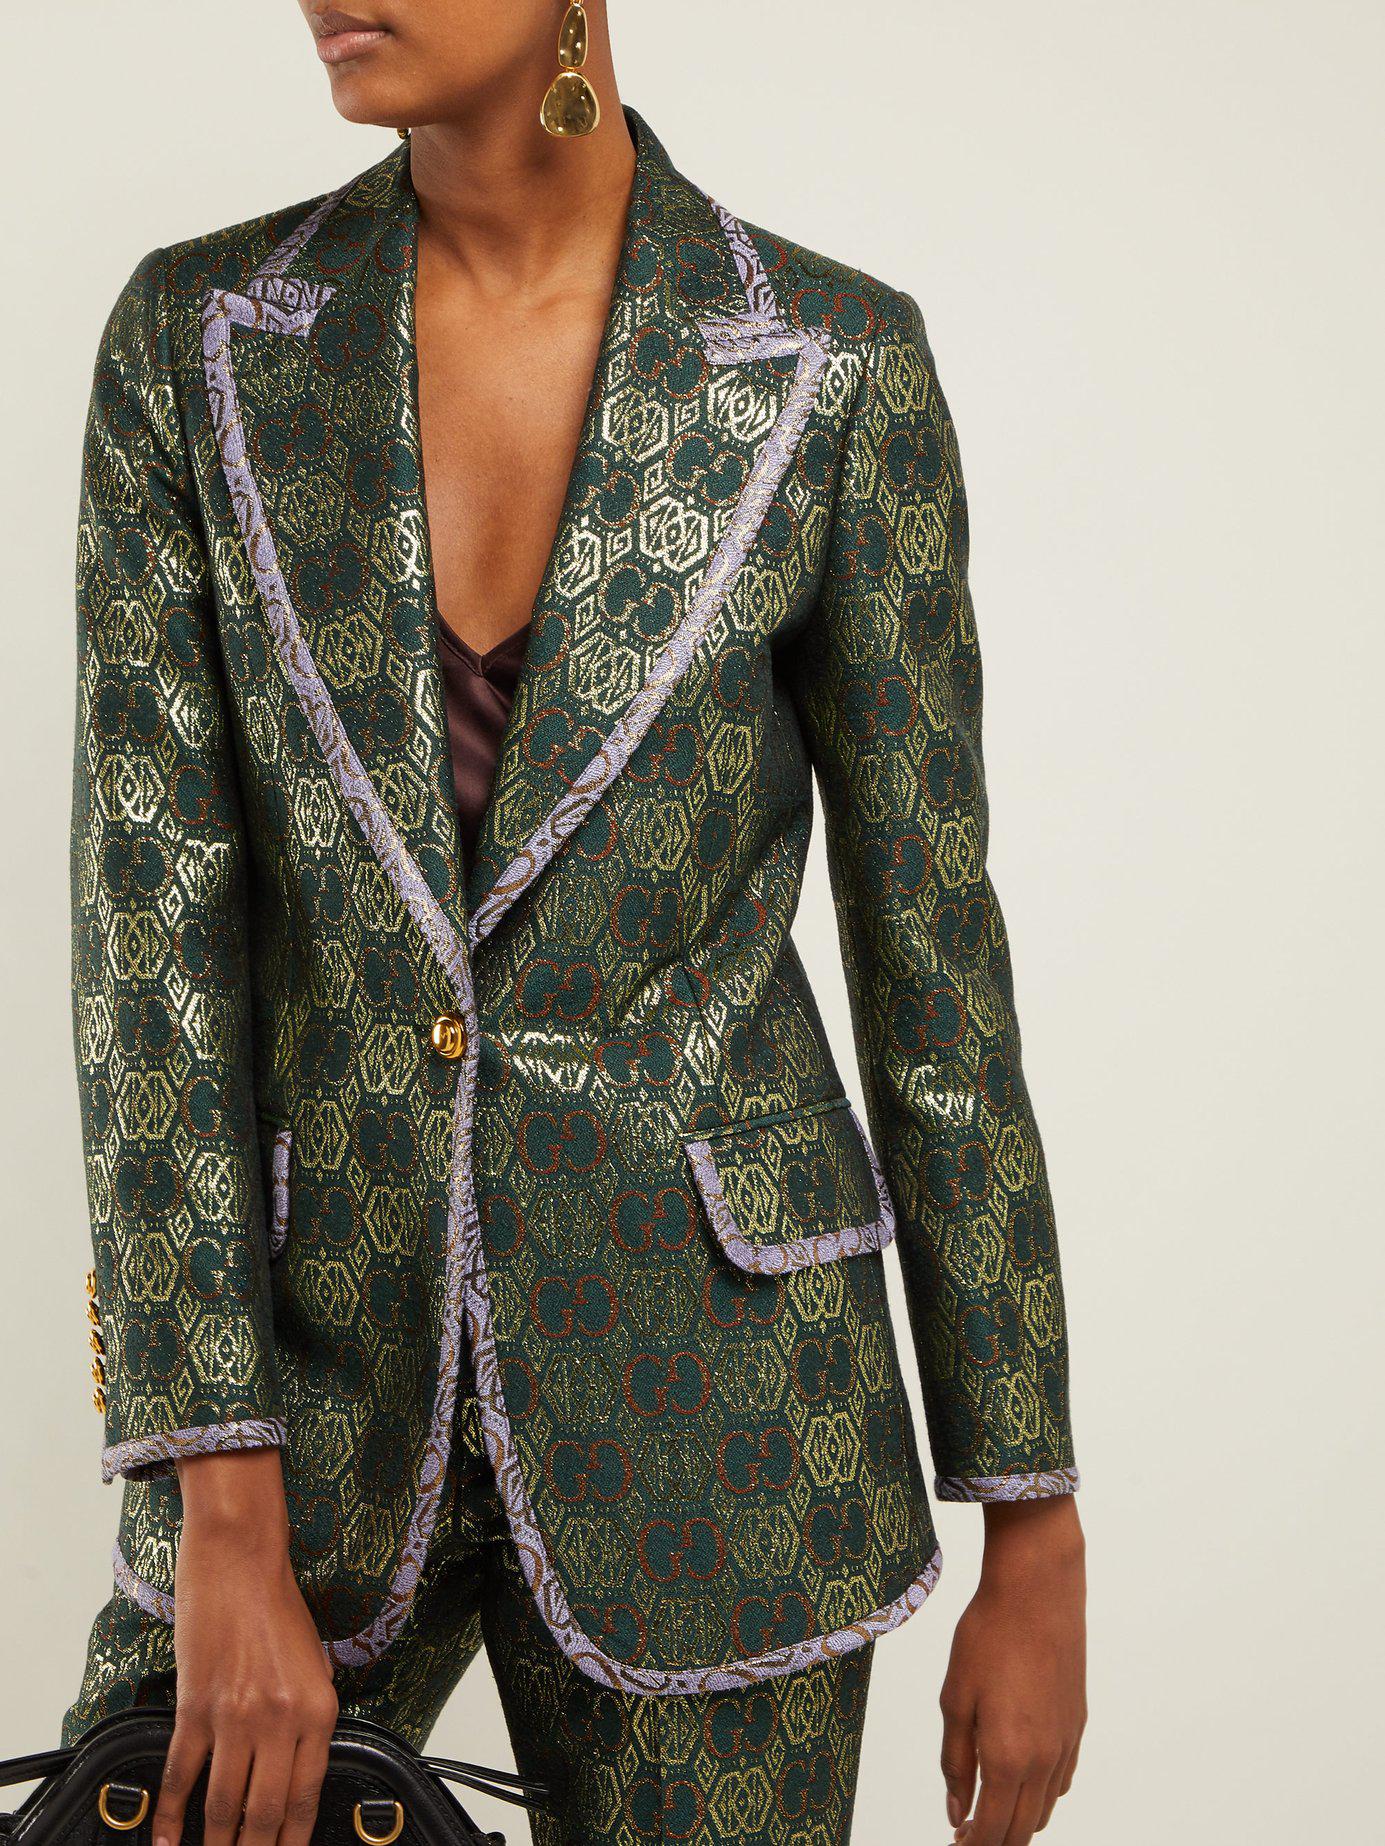 GG-jacquard single-breasted cotton blazer, Gucci, MATCHESFASHION.COM